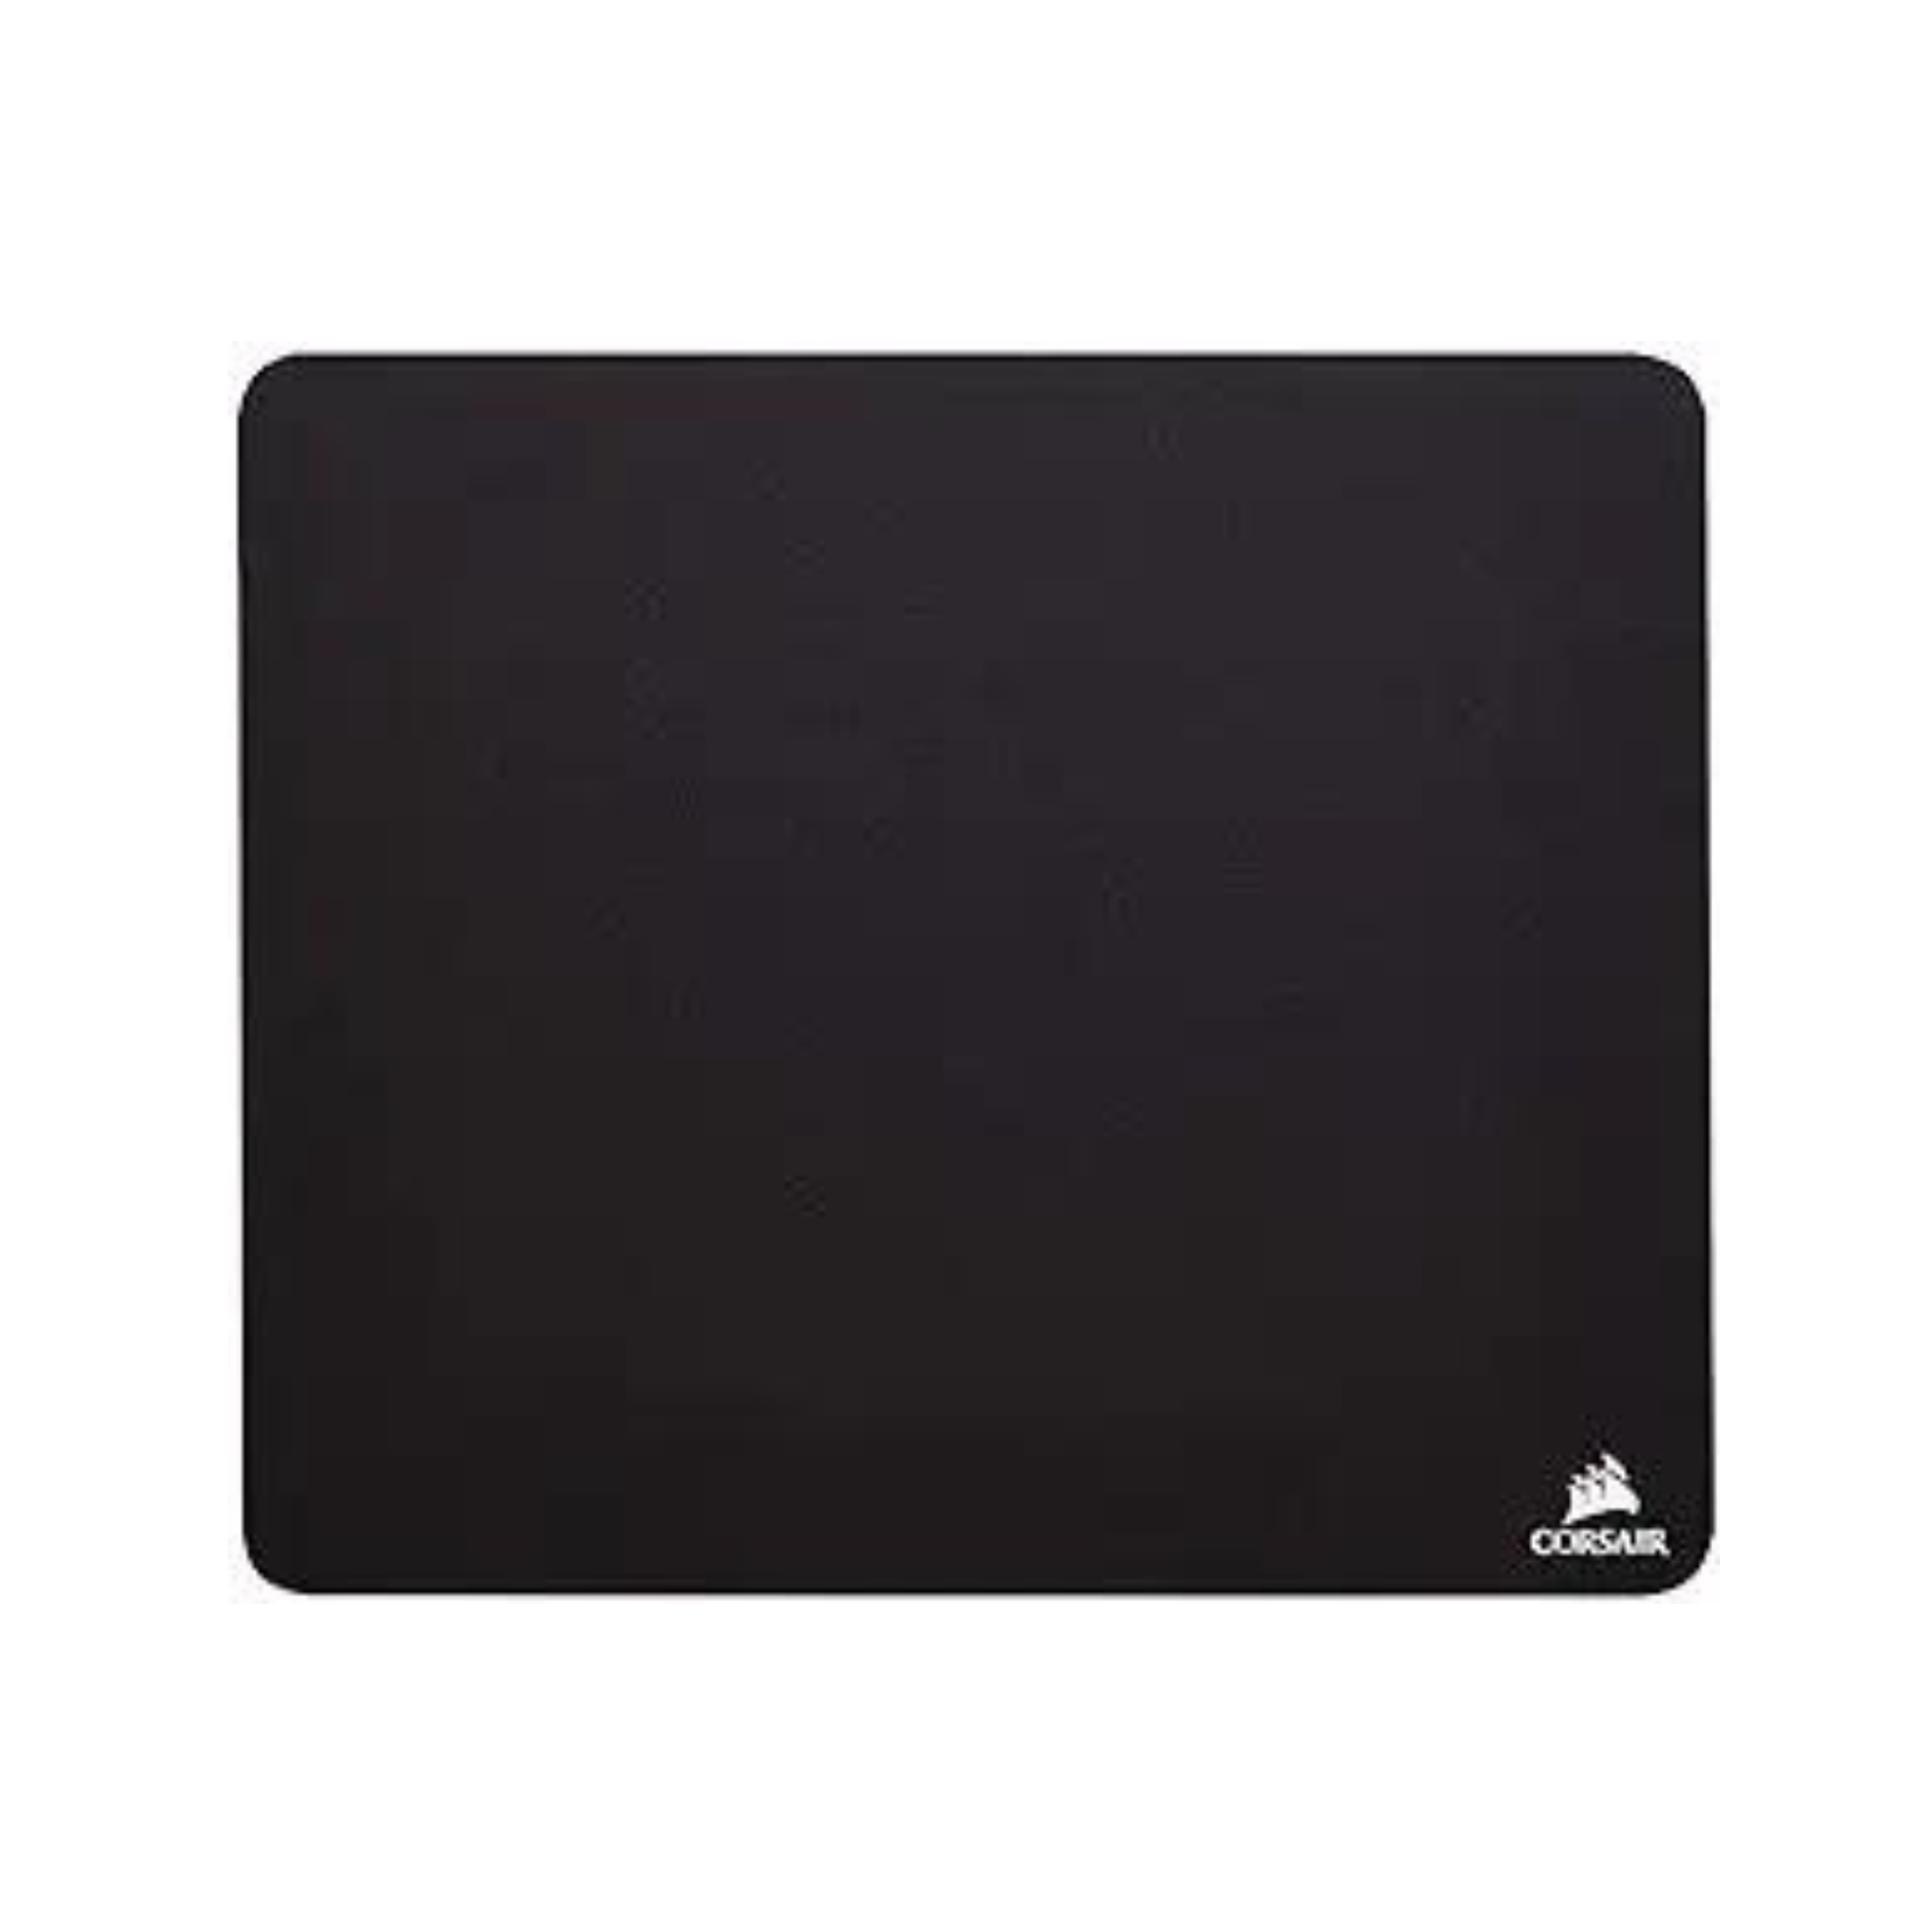 Corsair MM100 Cloth Gaming Mousepad (Black)